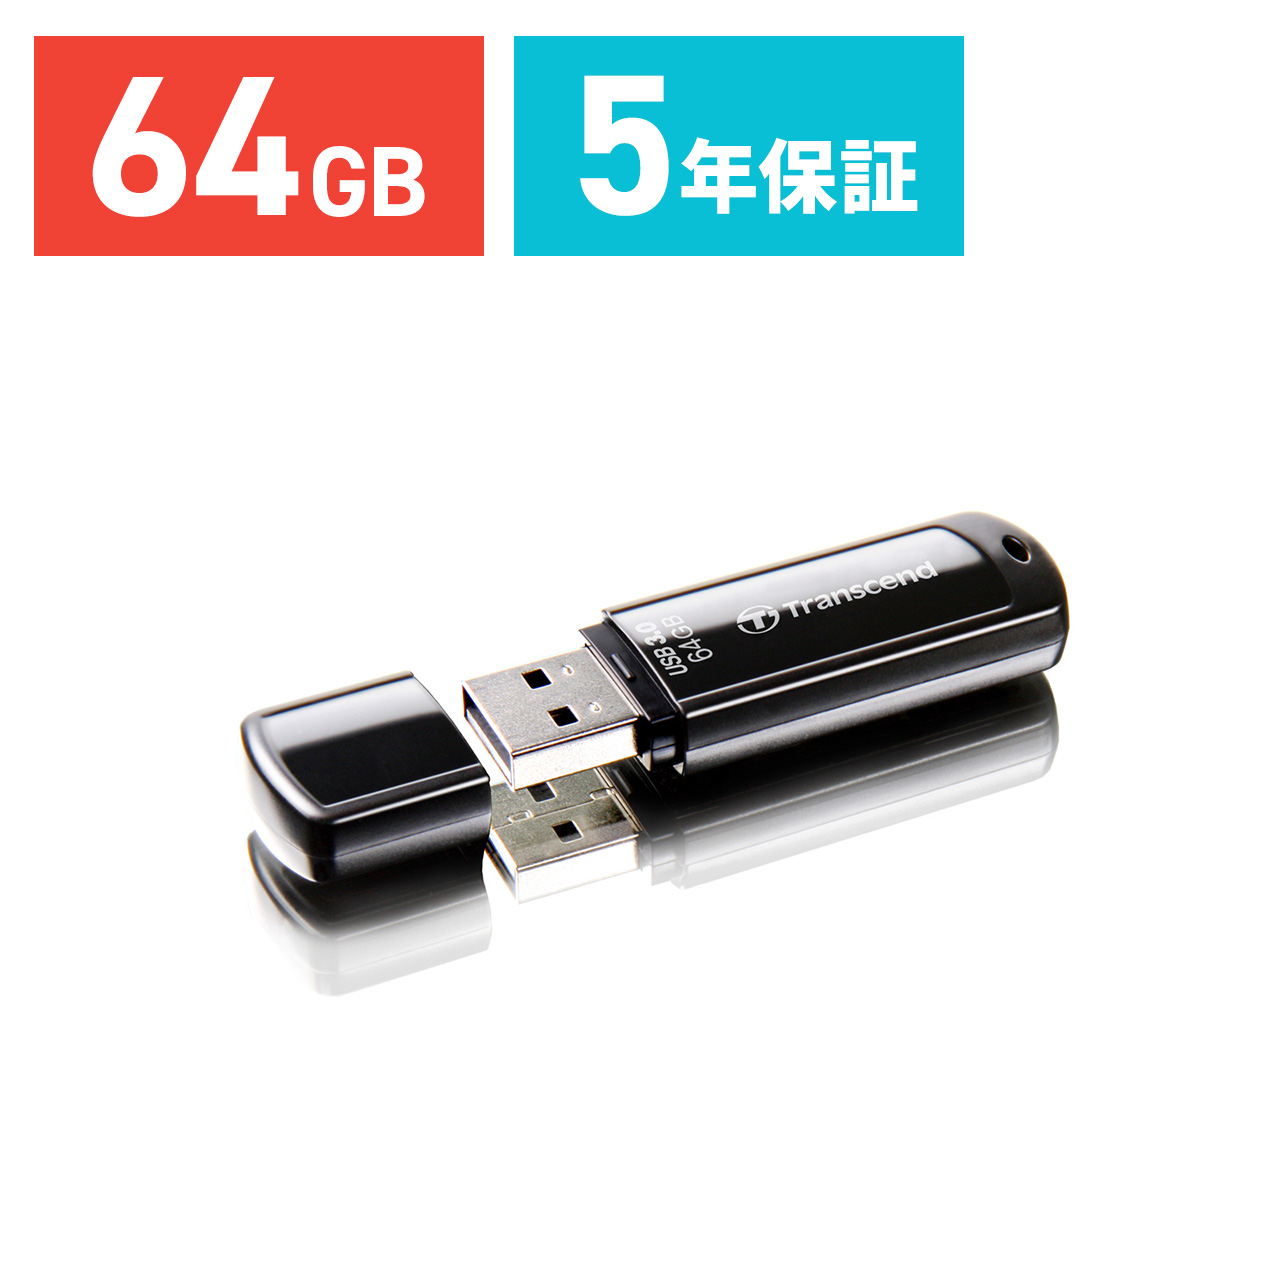 USBメモリ 64GB USB3.1(Gen1) Transcend社製 TS64GJF700 5年保証